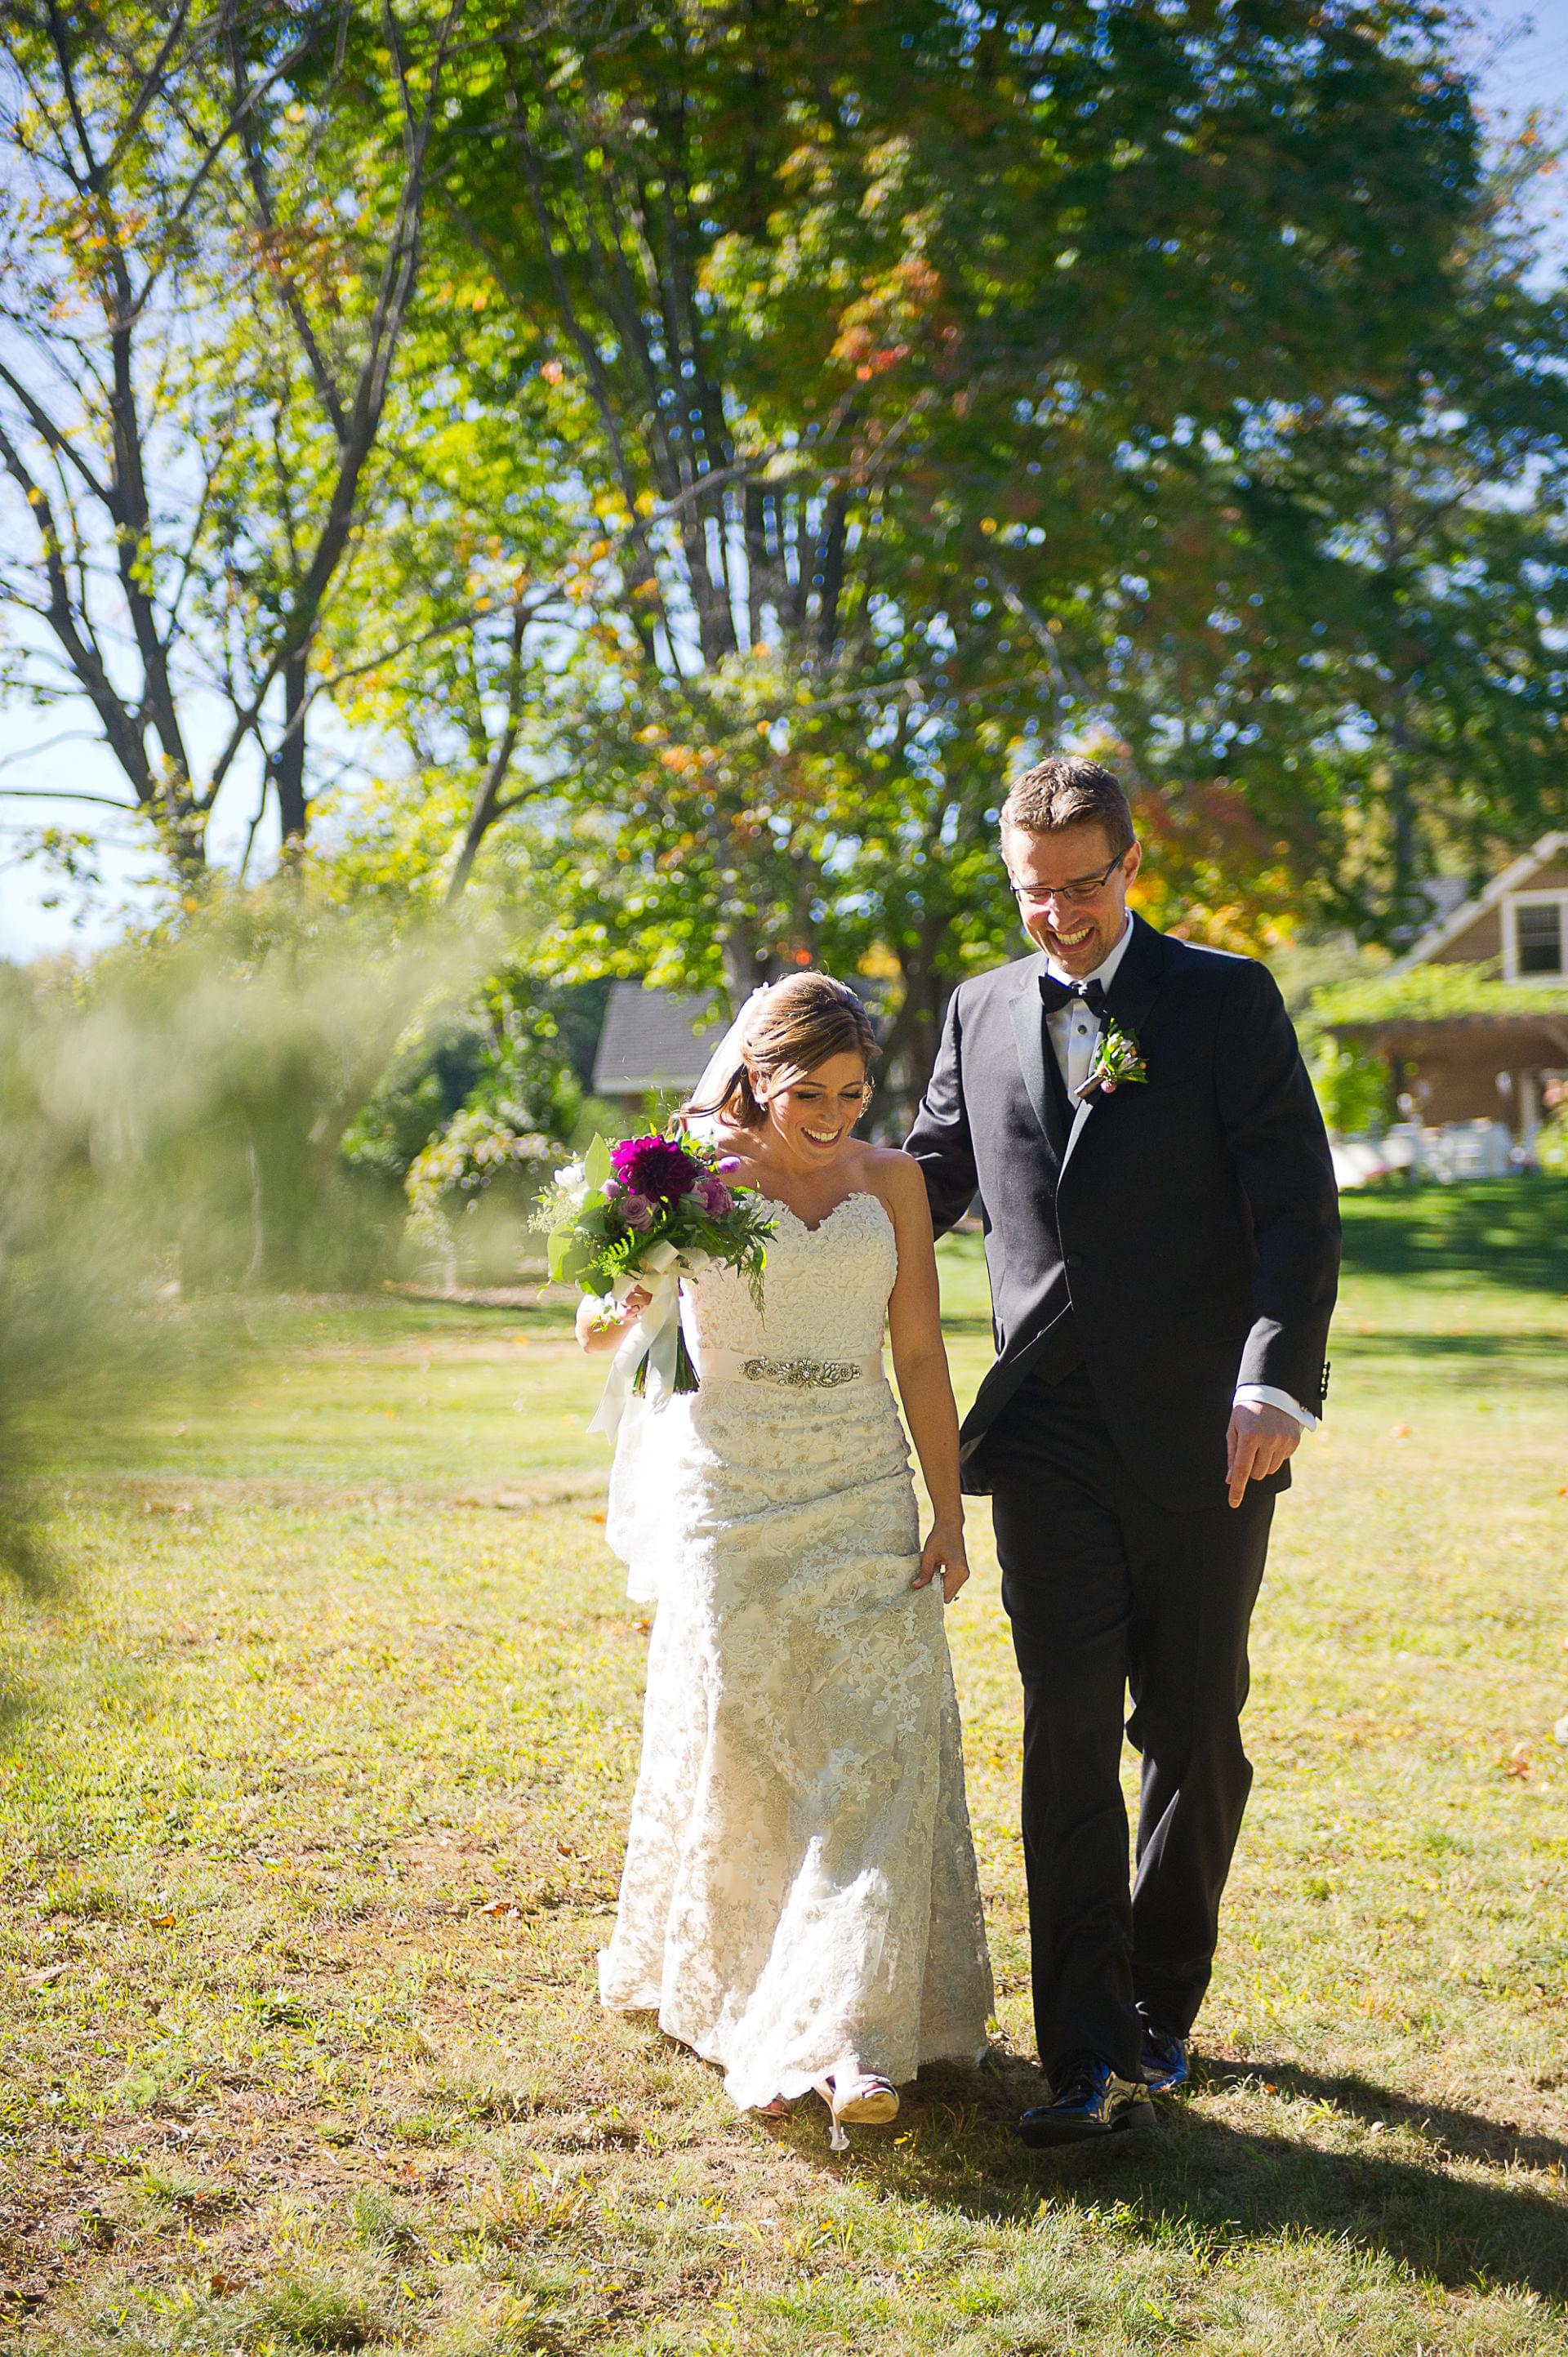 1116498 - Hudson Valley Wedding Video: A Beautiful Backyard Fête